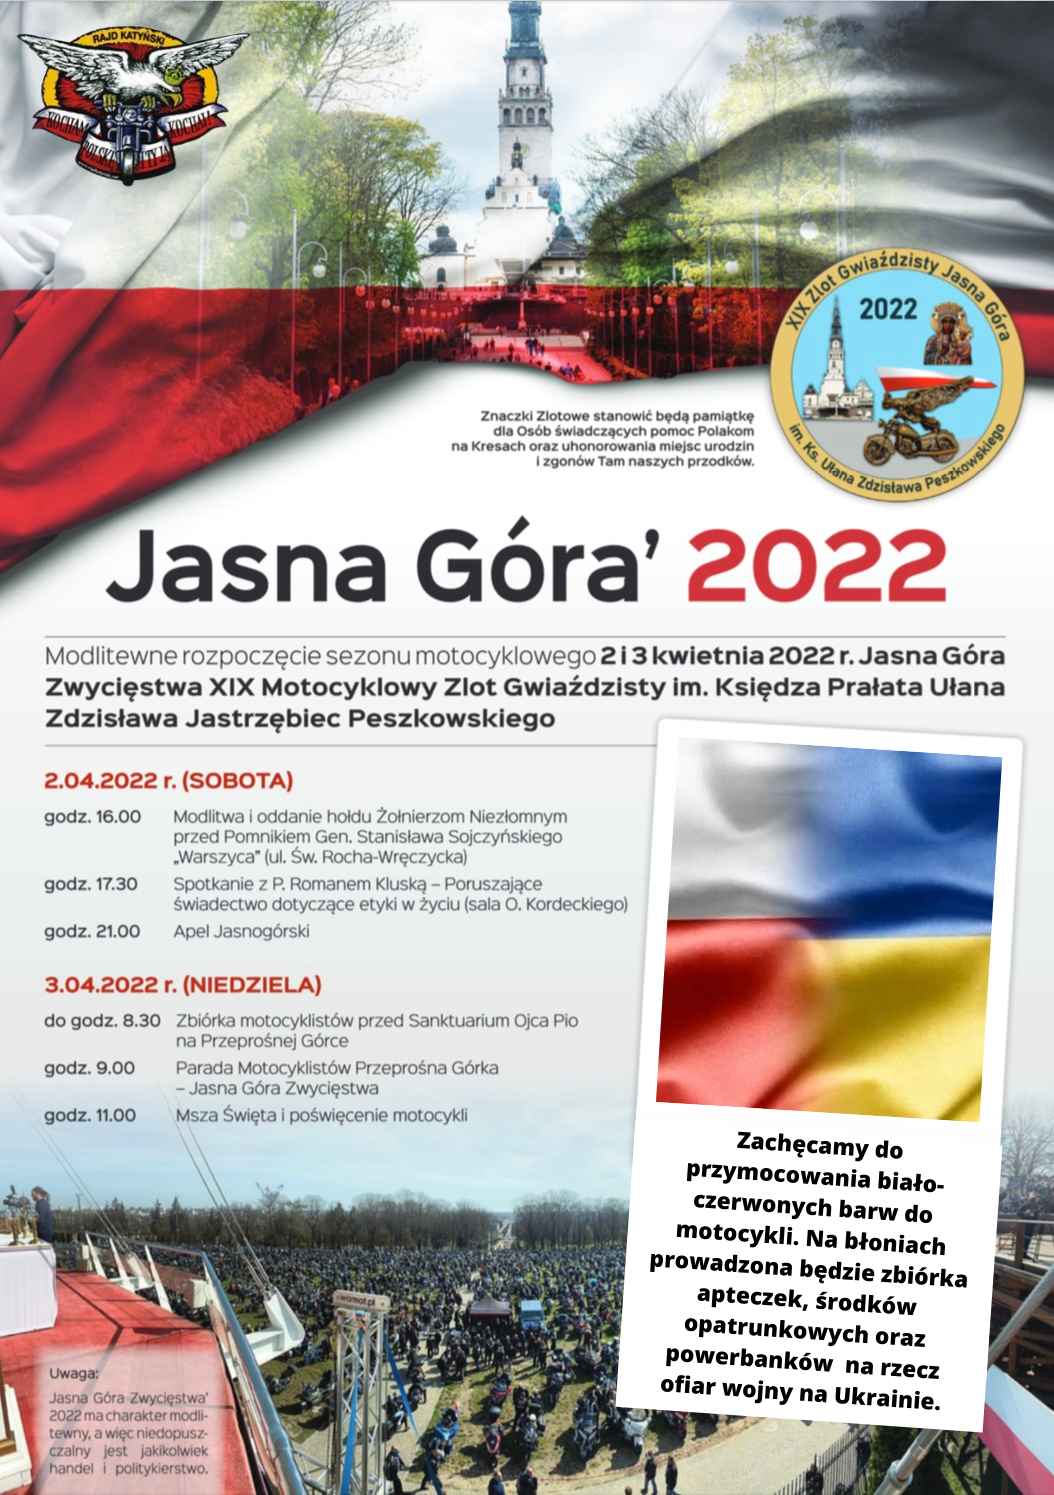 Jasna Gora 2022